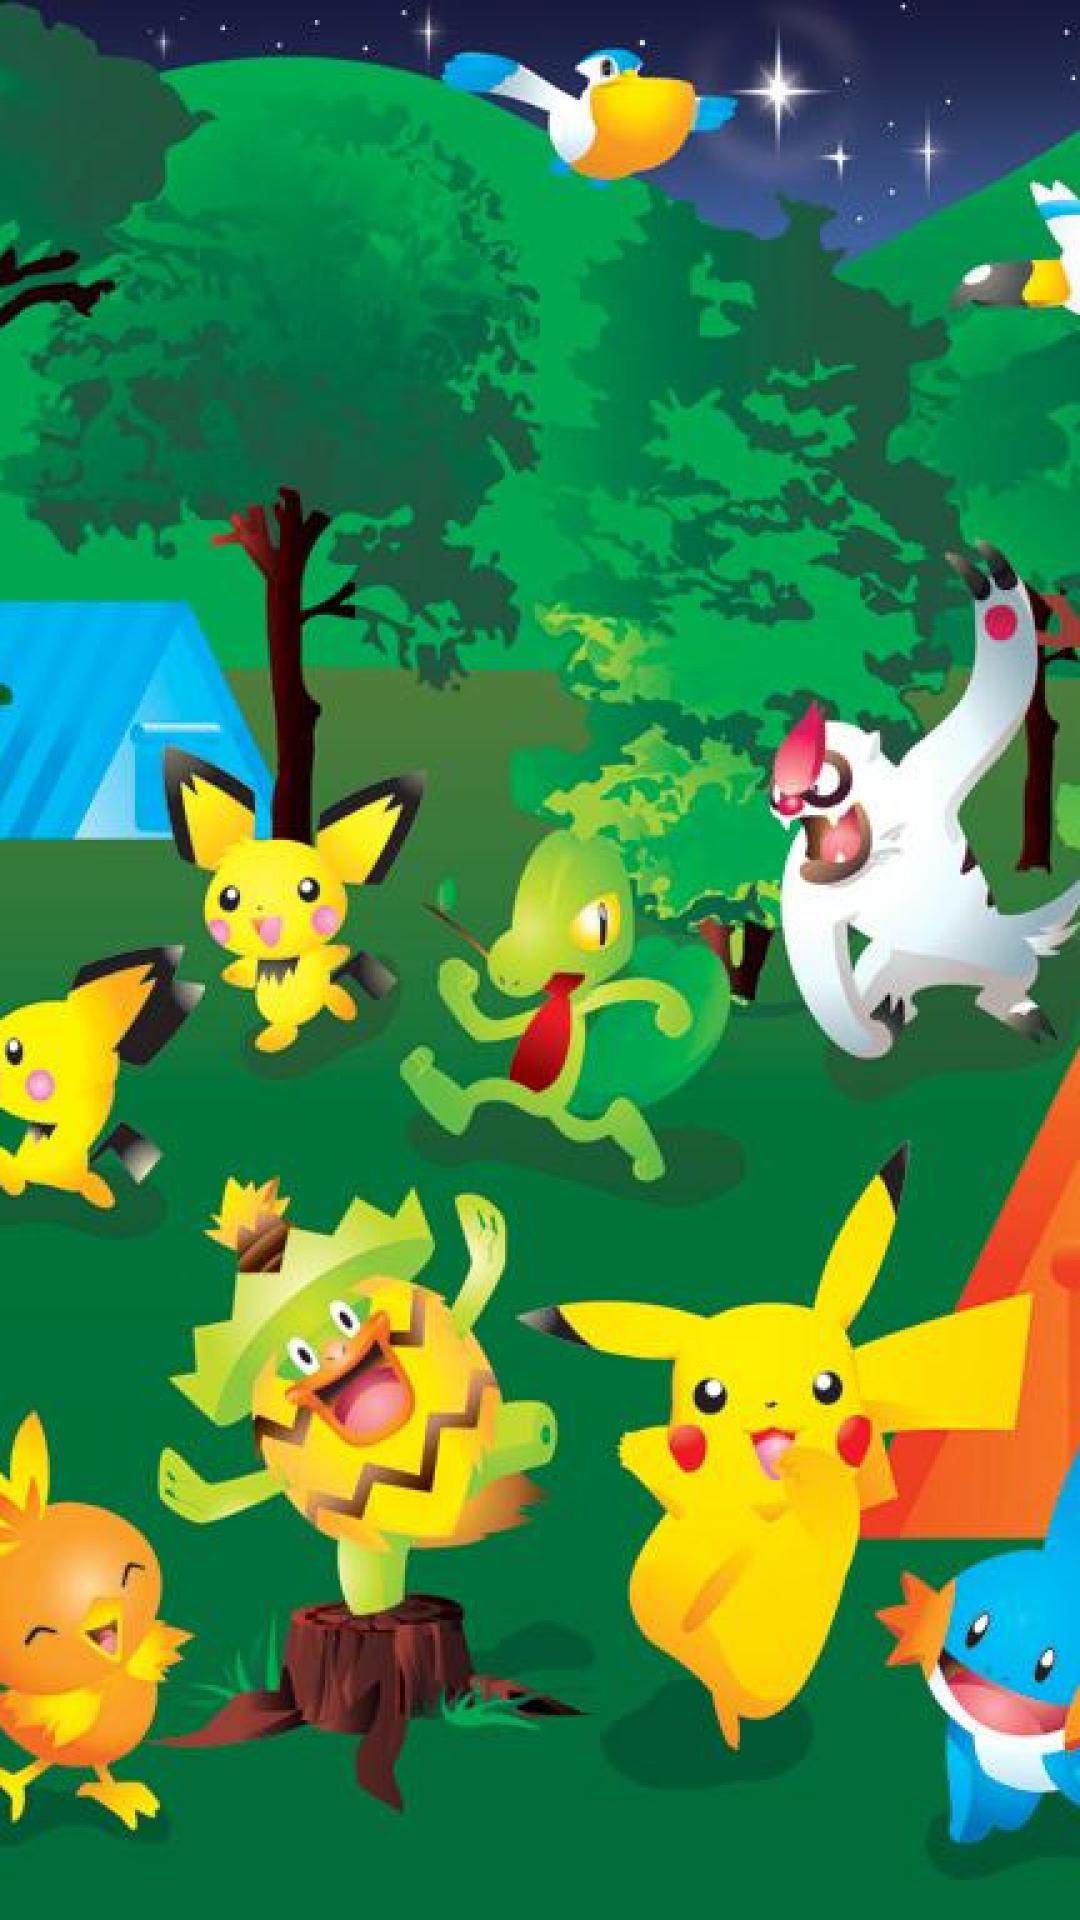 Legendary Pokemon Wallpaper Background, Great Wallpaper By 1152 Pixel Picture Pokemon Wallpaper & Background Download